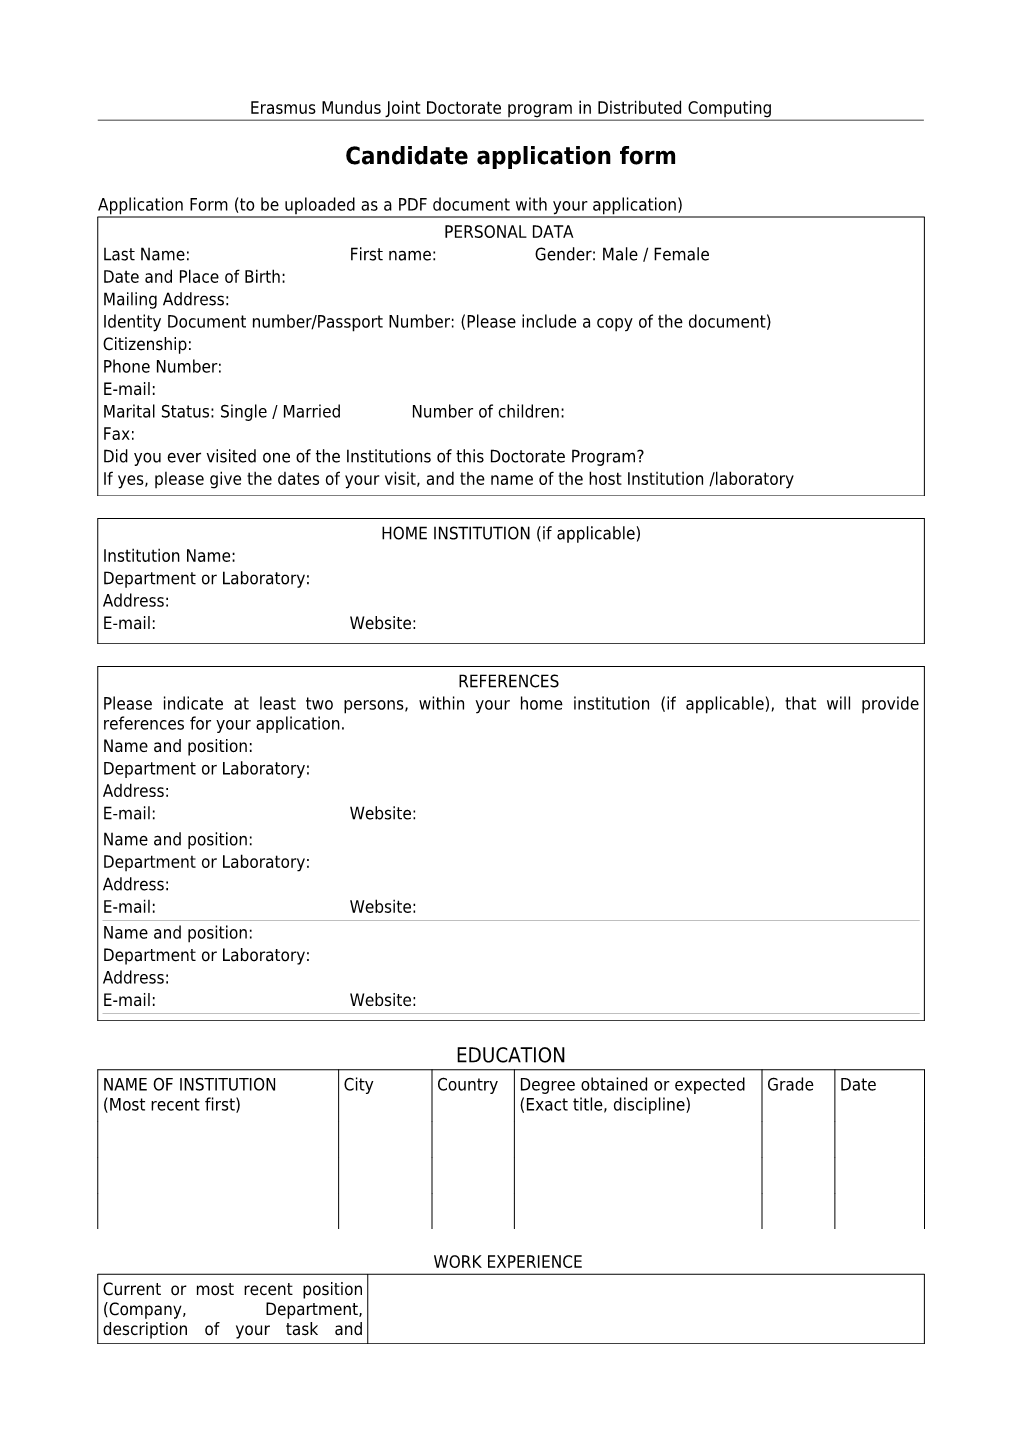 Annex C: Candidate Application Form